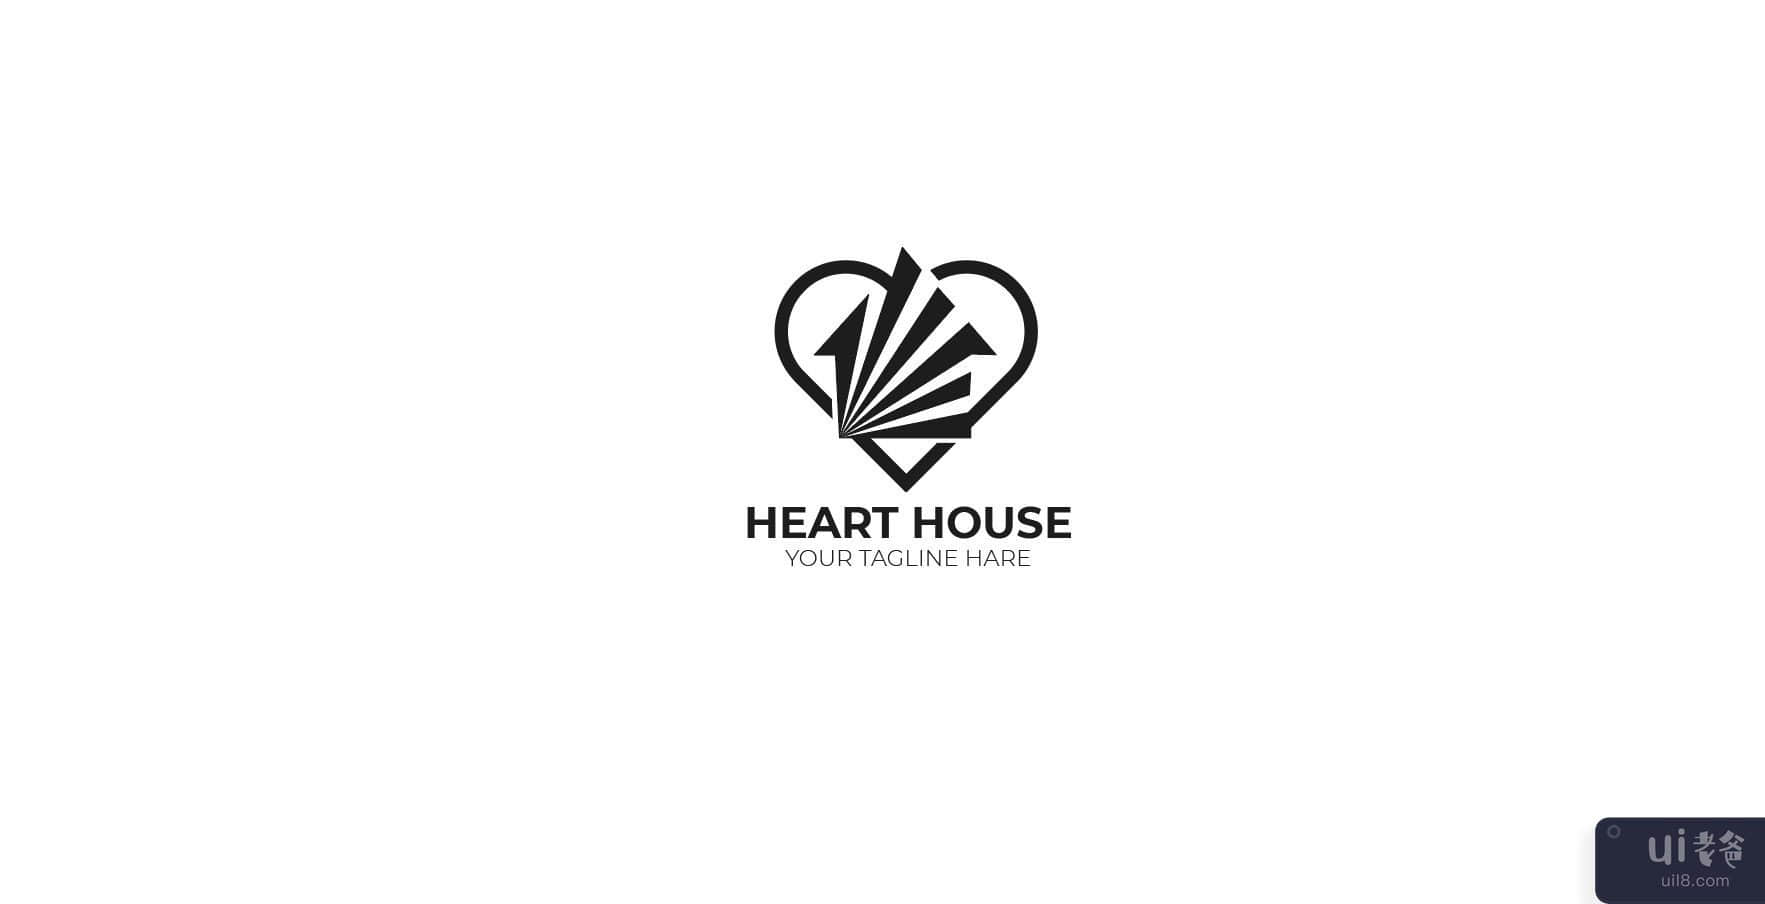 心之家徽标(Heart House logo)插图1